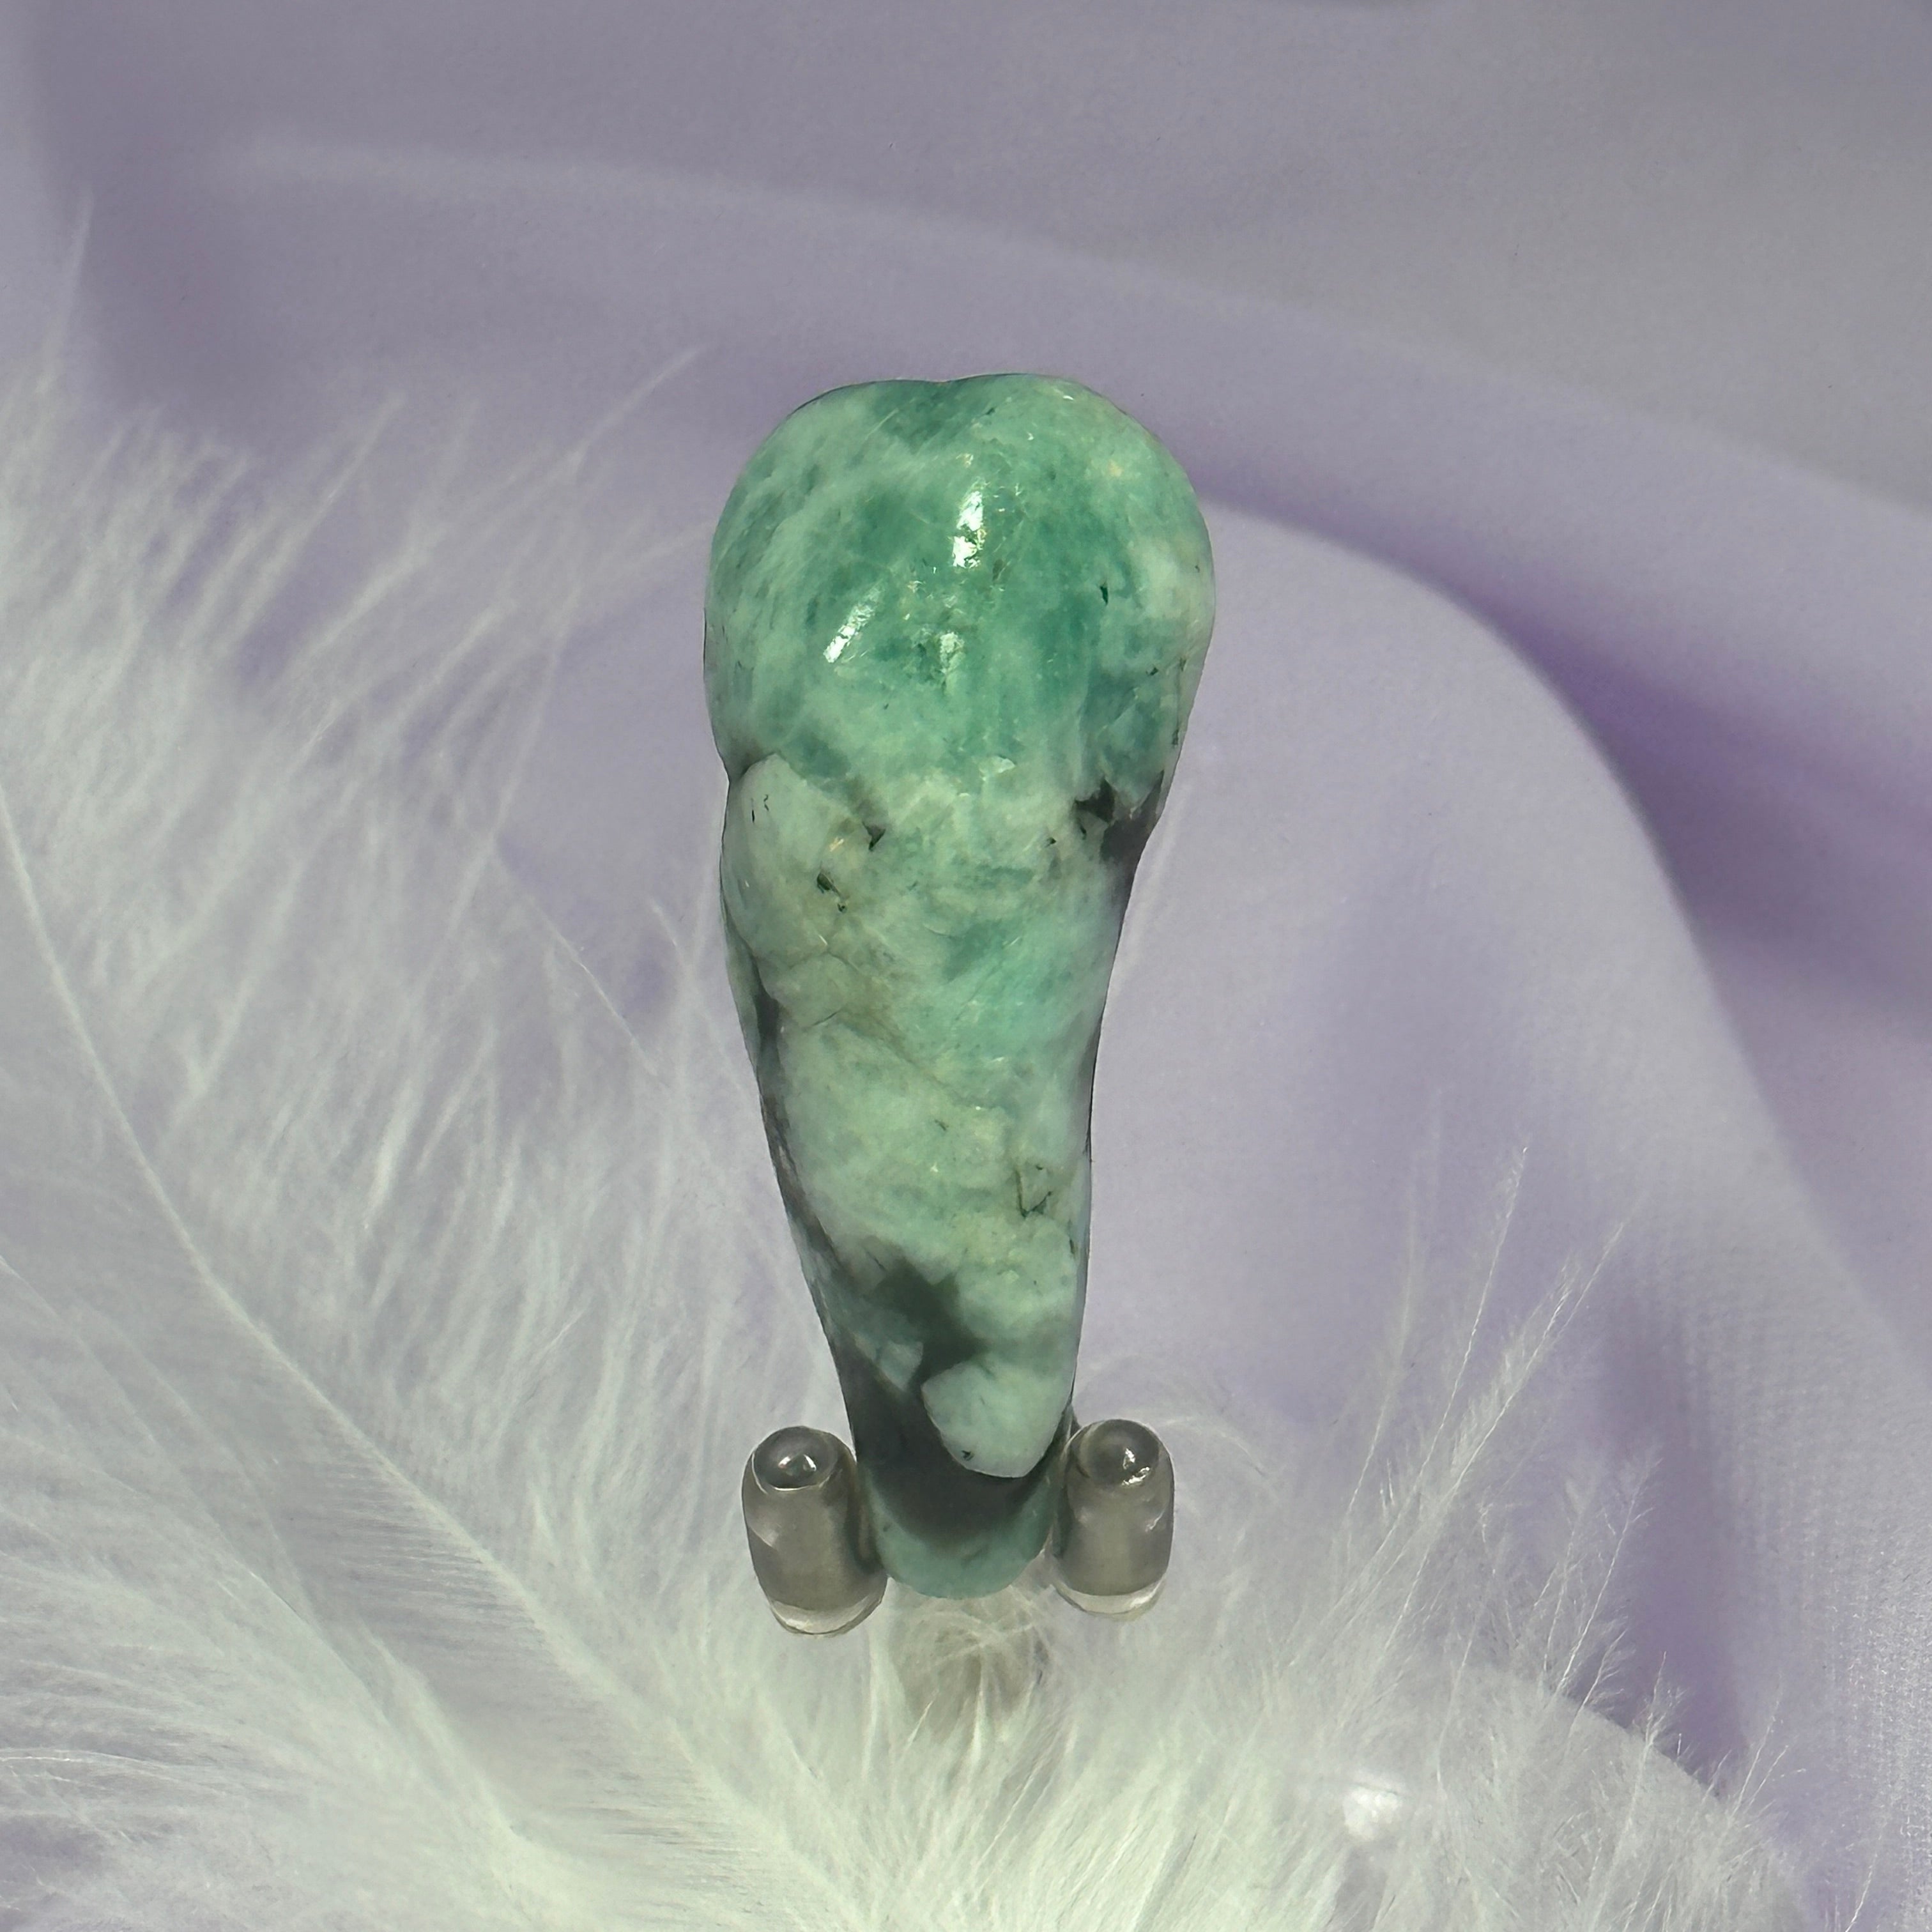 Emerald crystal tumble stone 15.0g SN50270